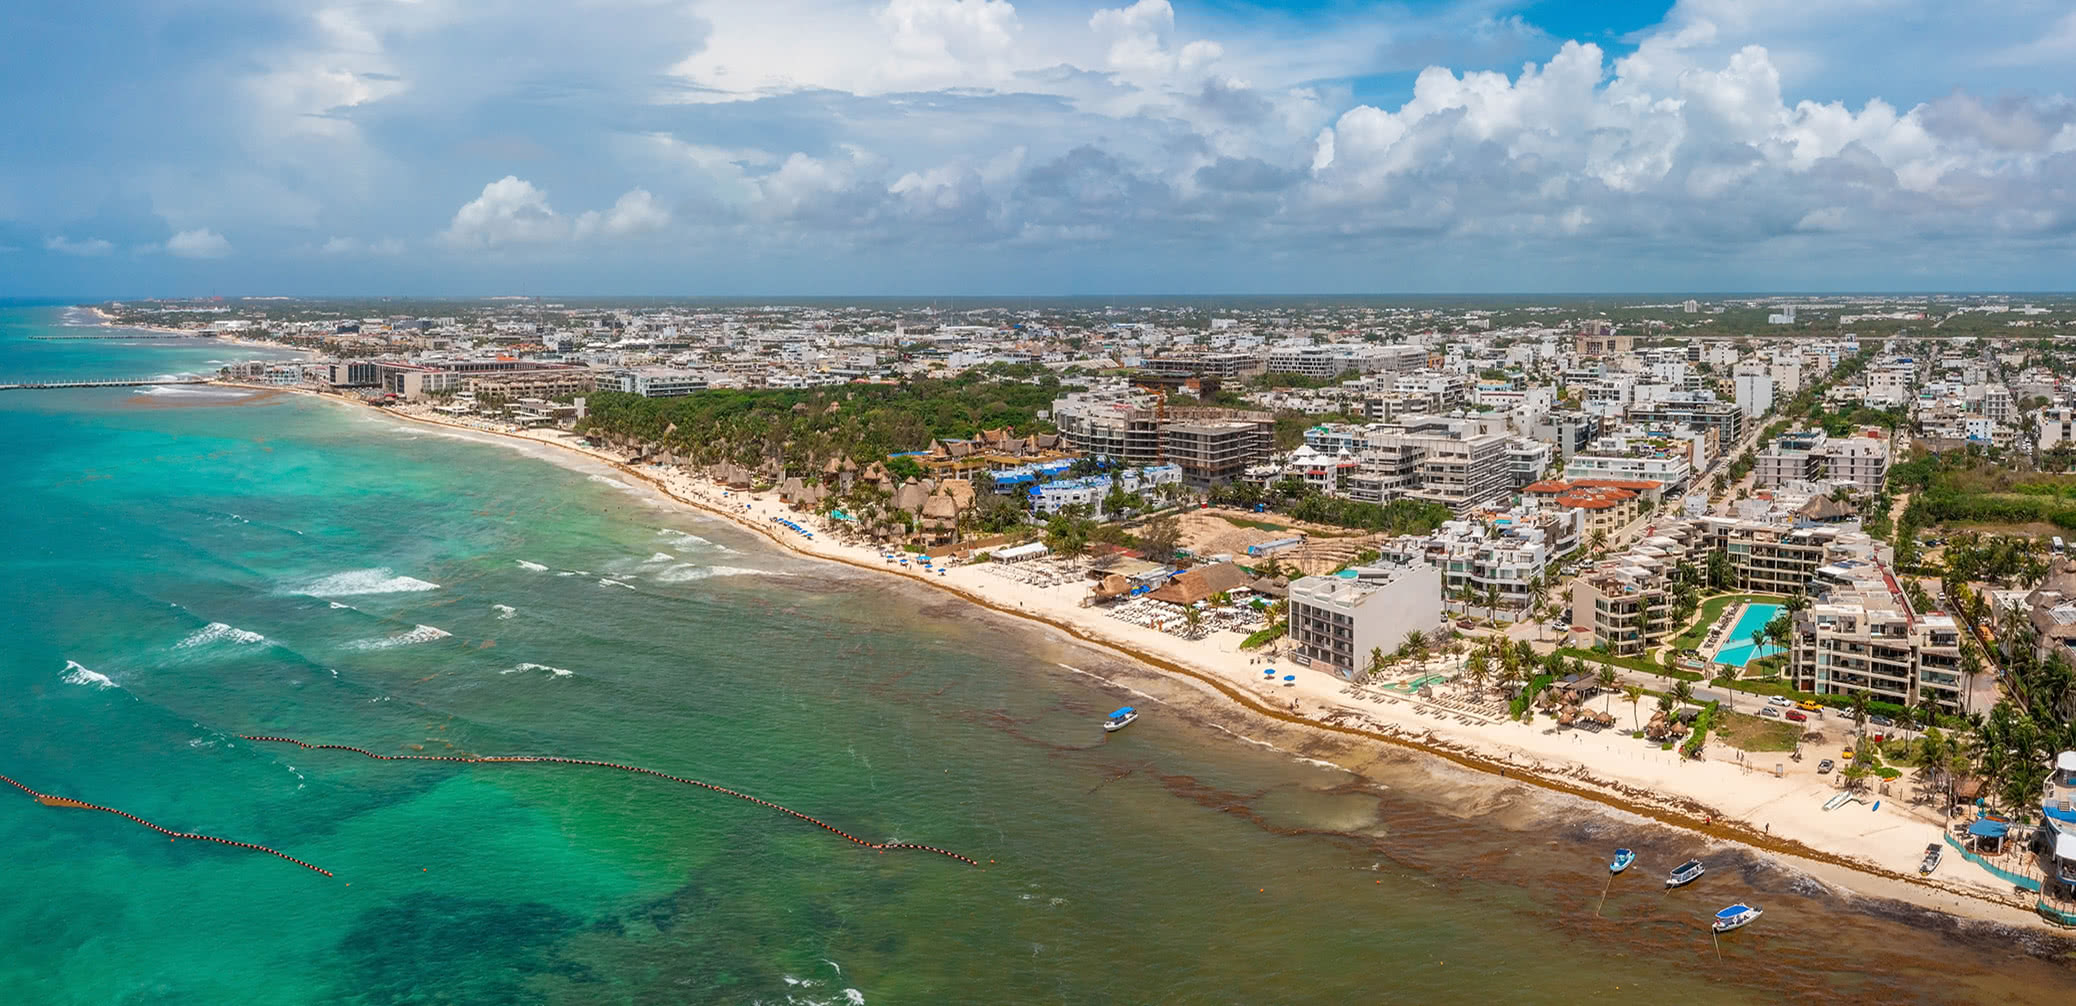 Top 5 Best Hotels Near The Beach In Playa Del Carmen, Mexico